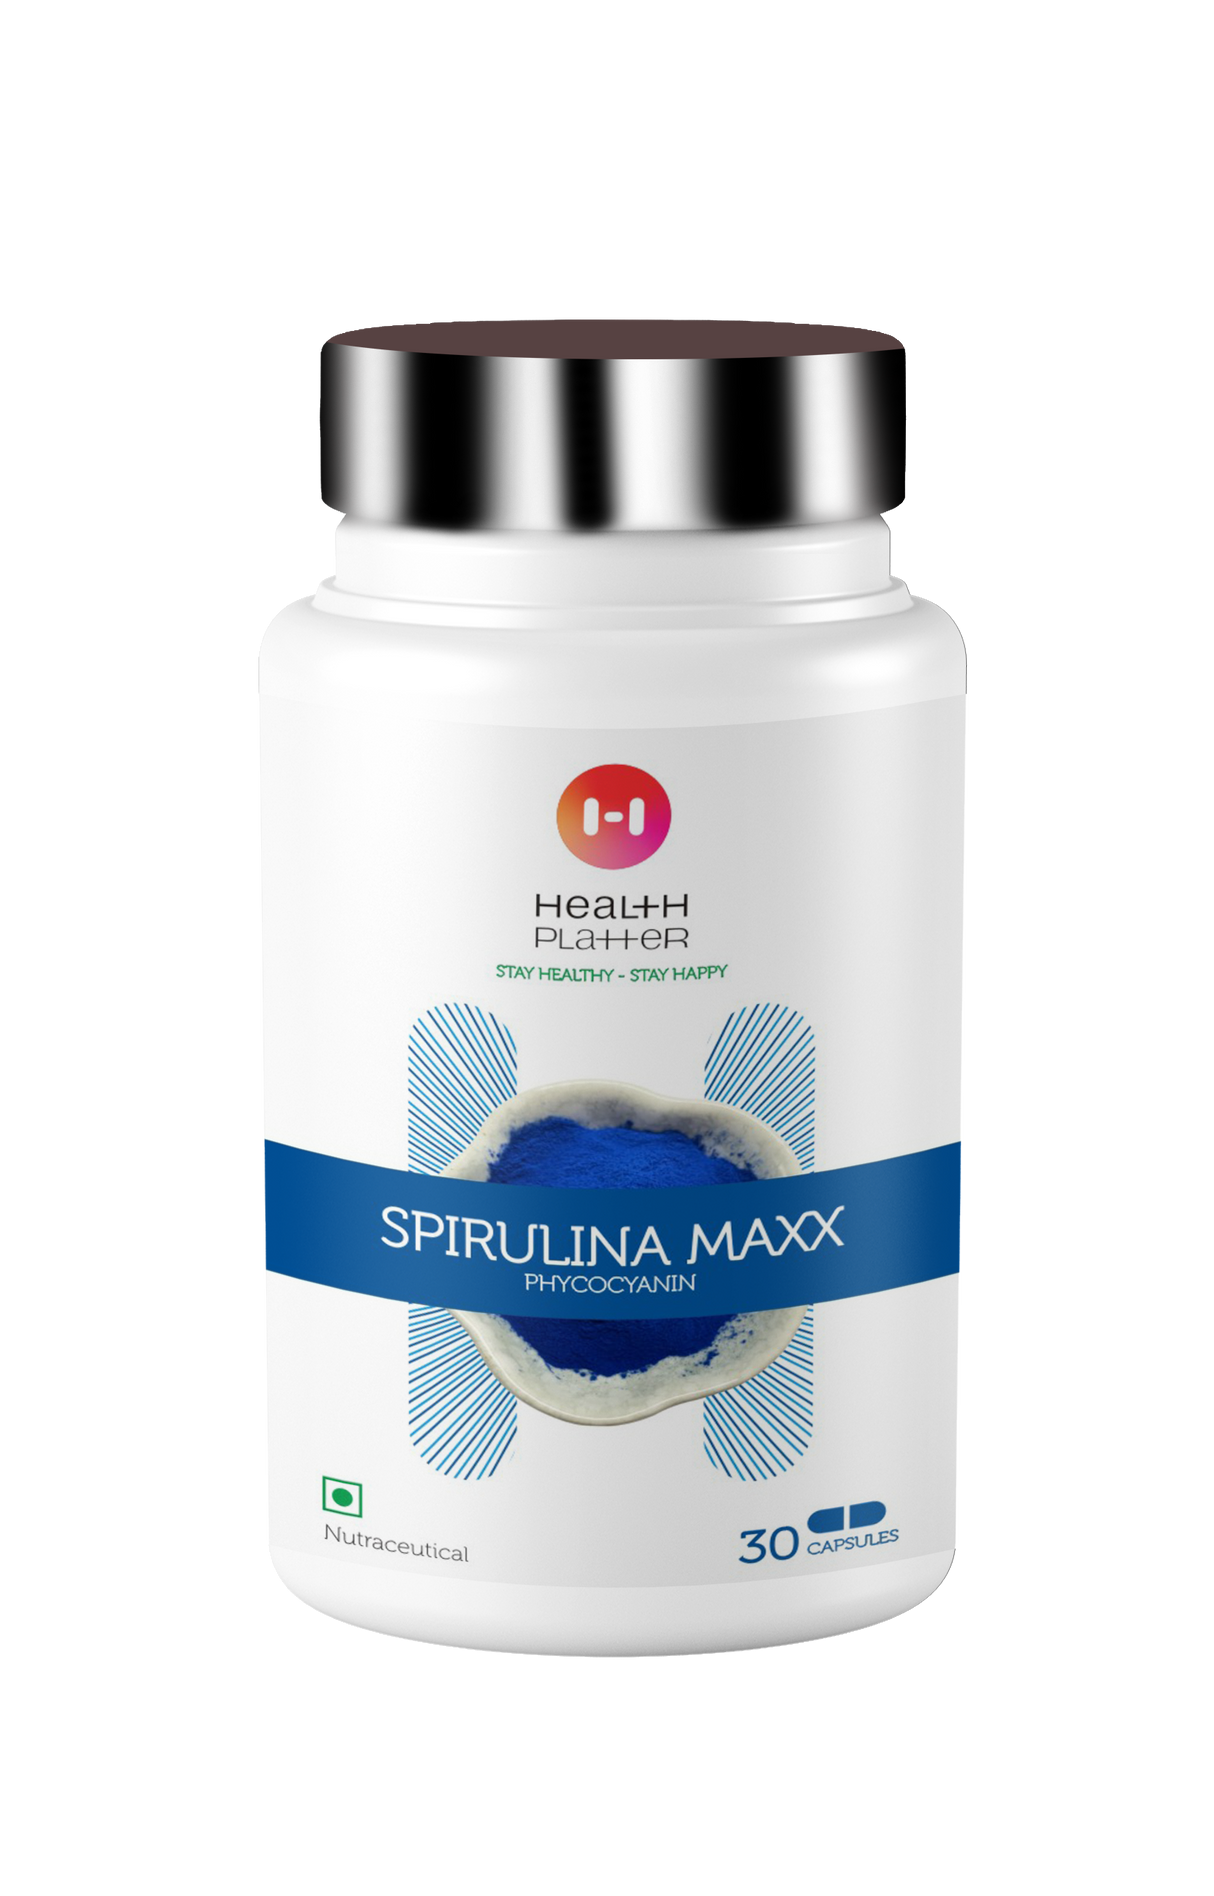 Health Platter Spirulina Maxx - Phycocyanin Capsules